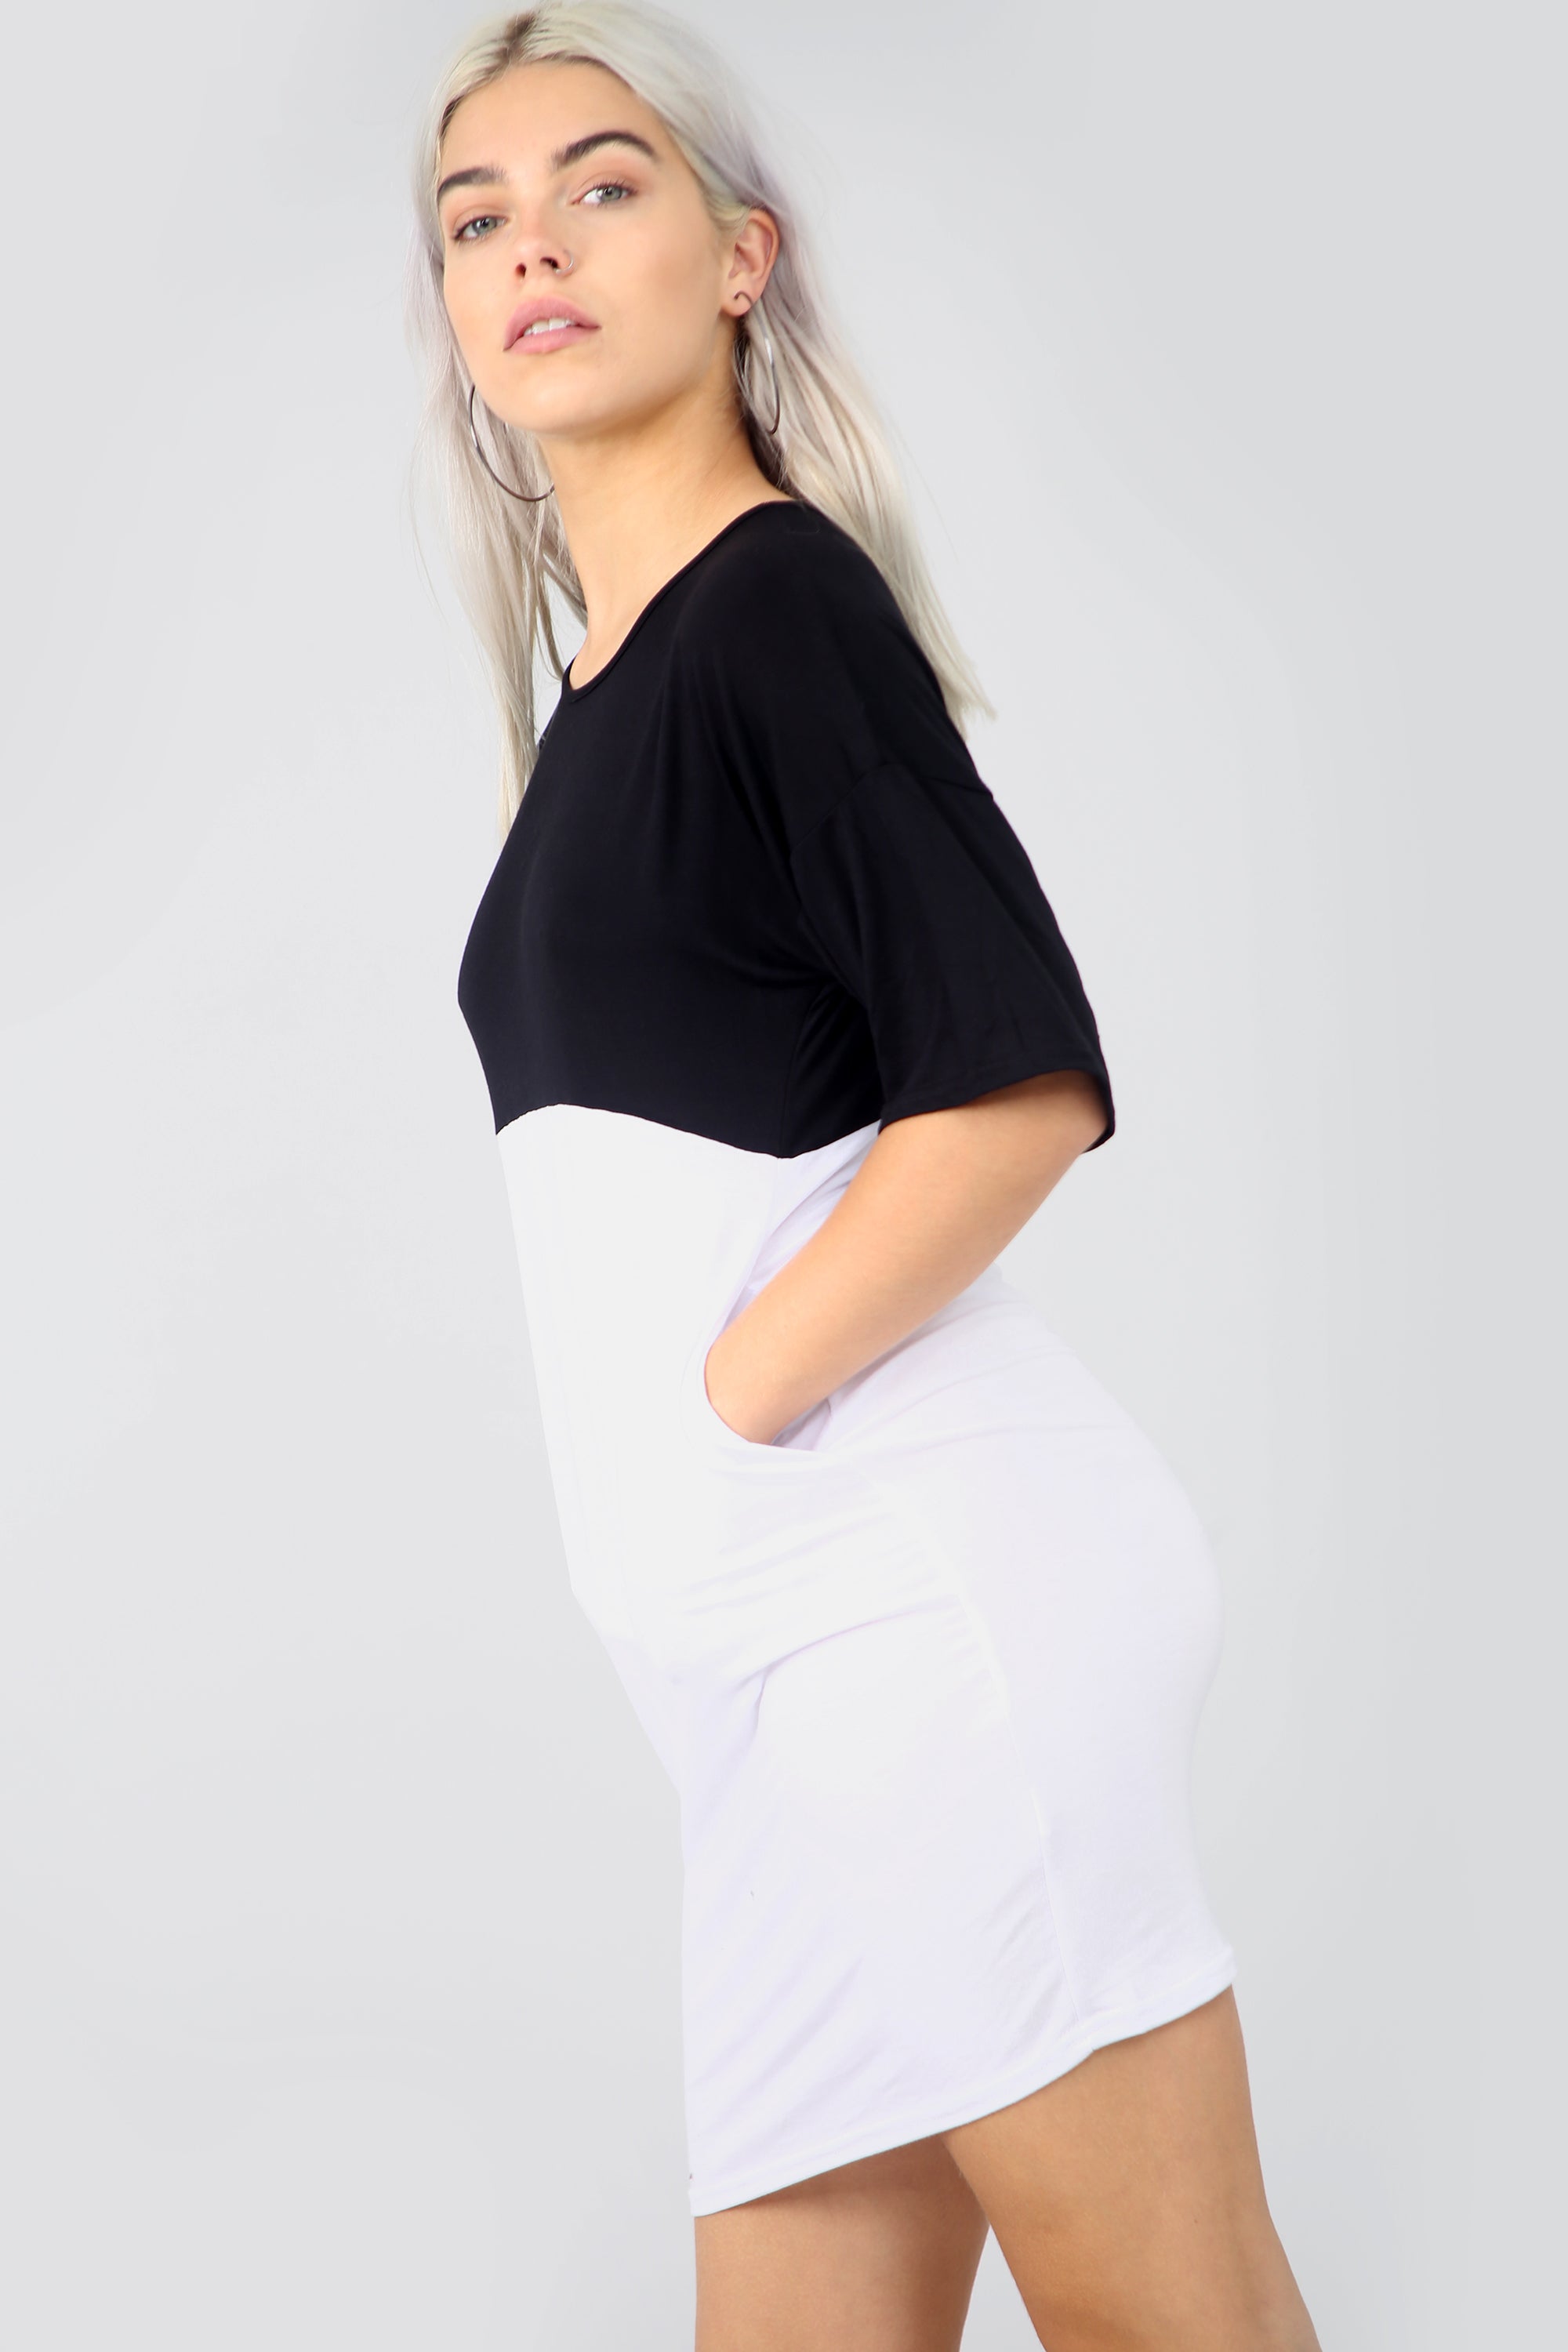 Black Oversize Basic Tshirt Dress With Pockets - bejealous-com